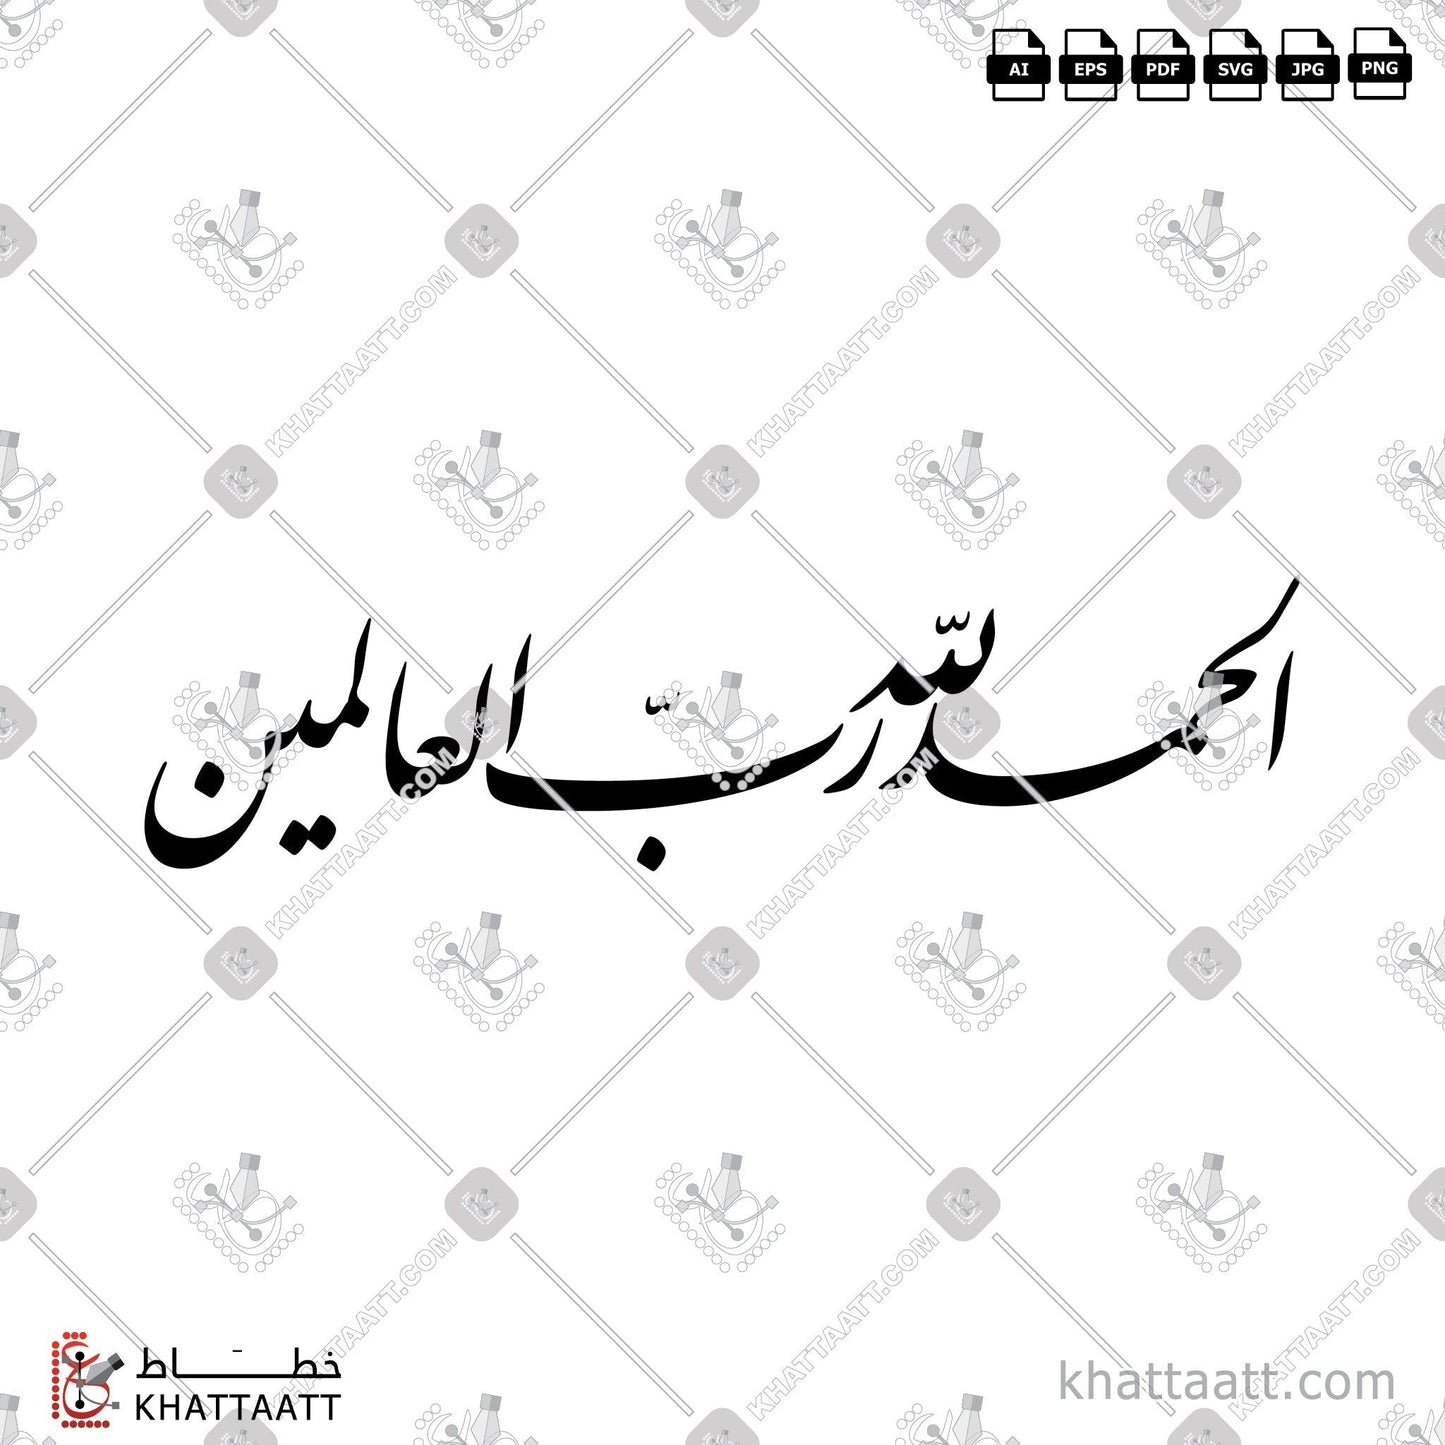 Download Arabic Calligraphy of الحمد لله رب العالمين in Farsi - الخط الفارسي in vector and .png